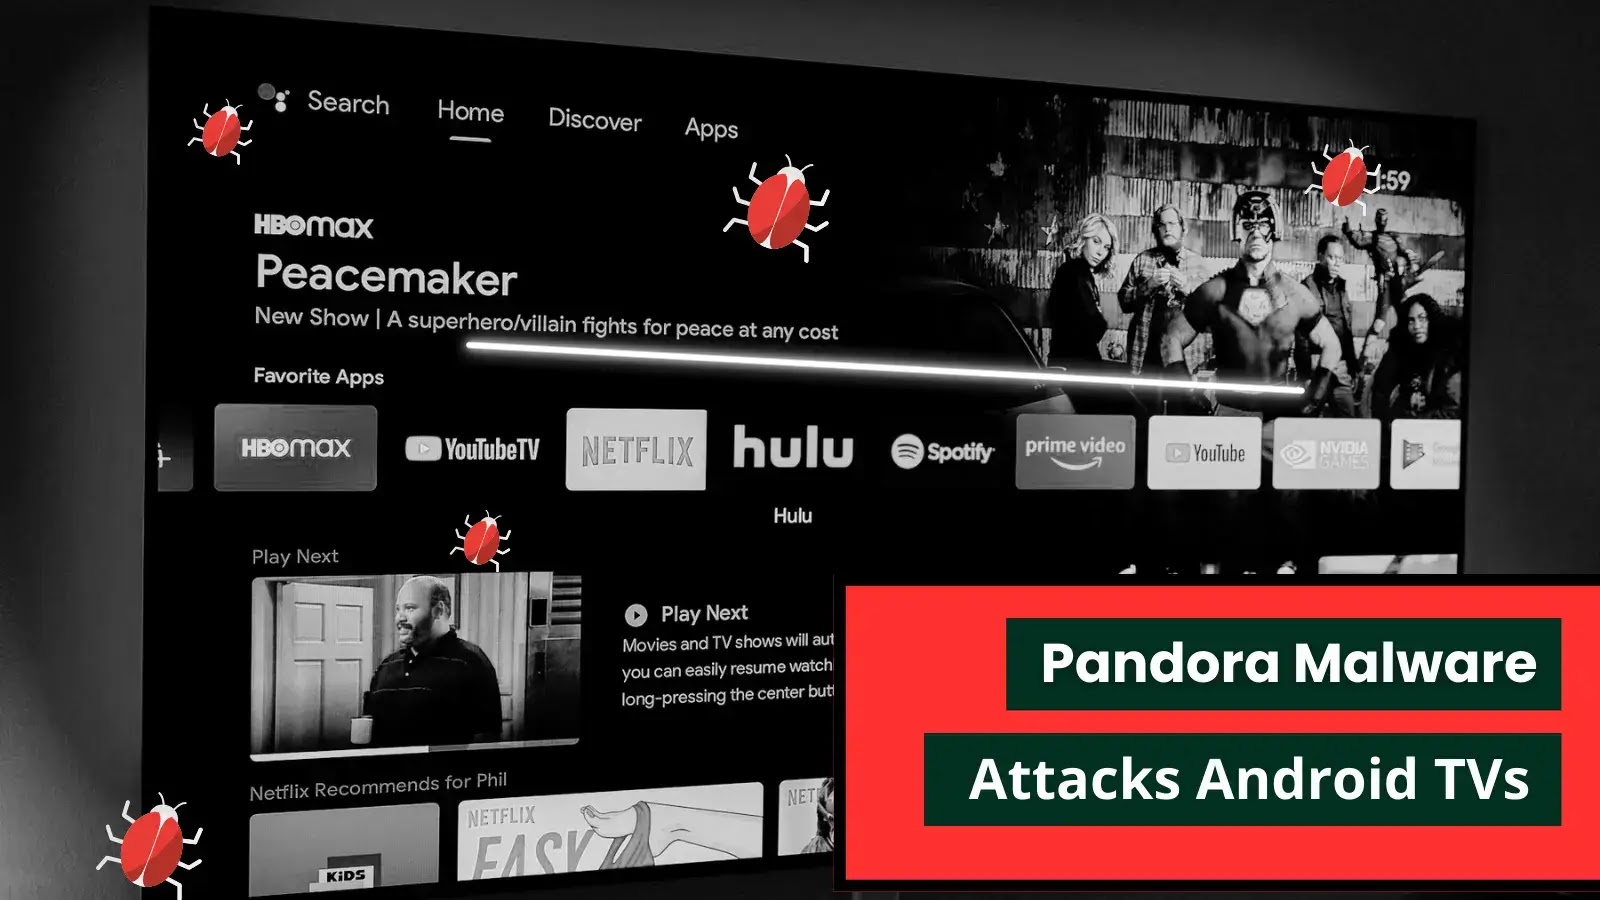 Pandora Malware Attacks Android TVs via firmware updates and pirated video